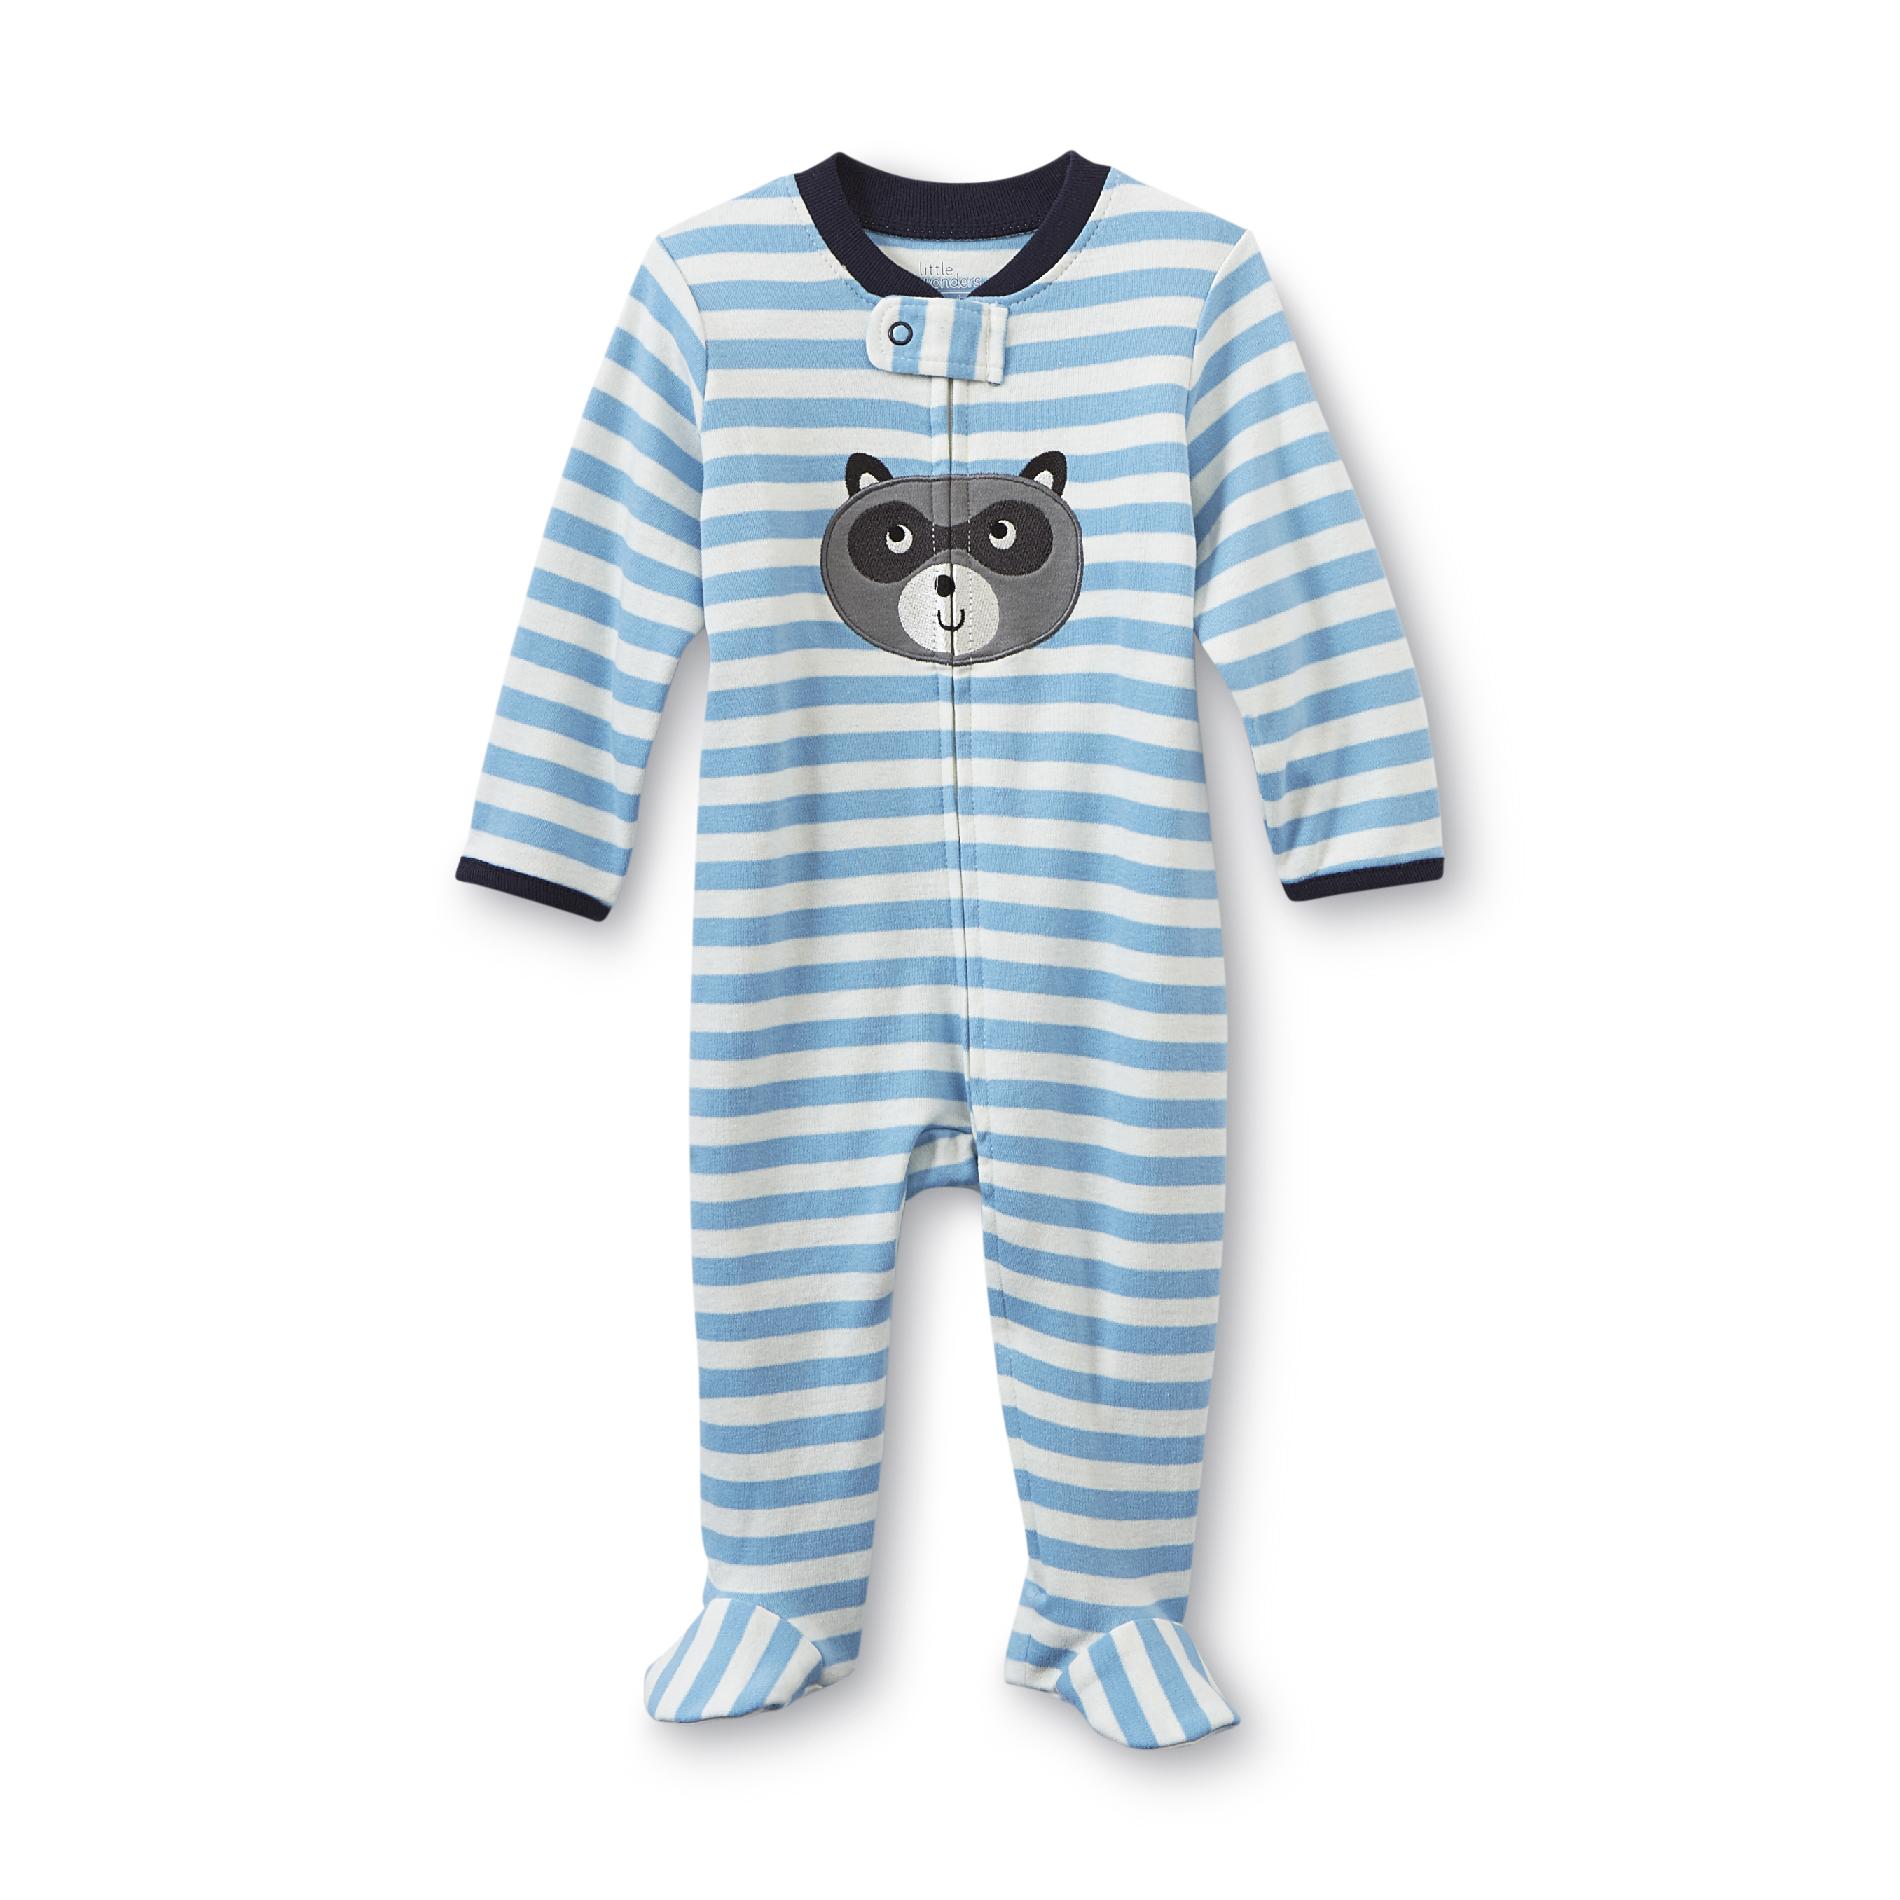 Little Wonders Newborn Boy's Footed Sleeper - Raccoon